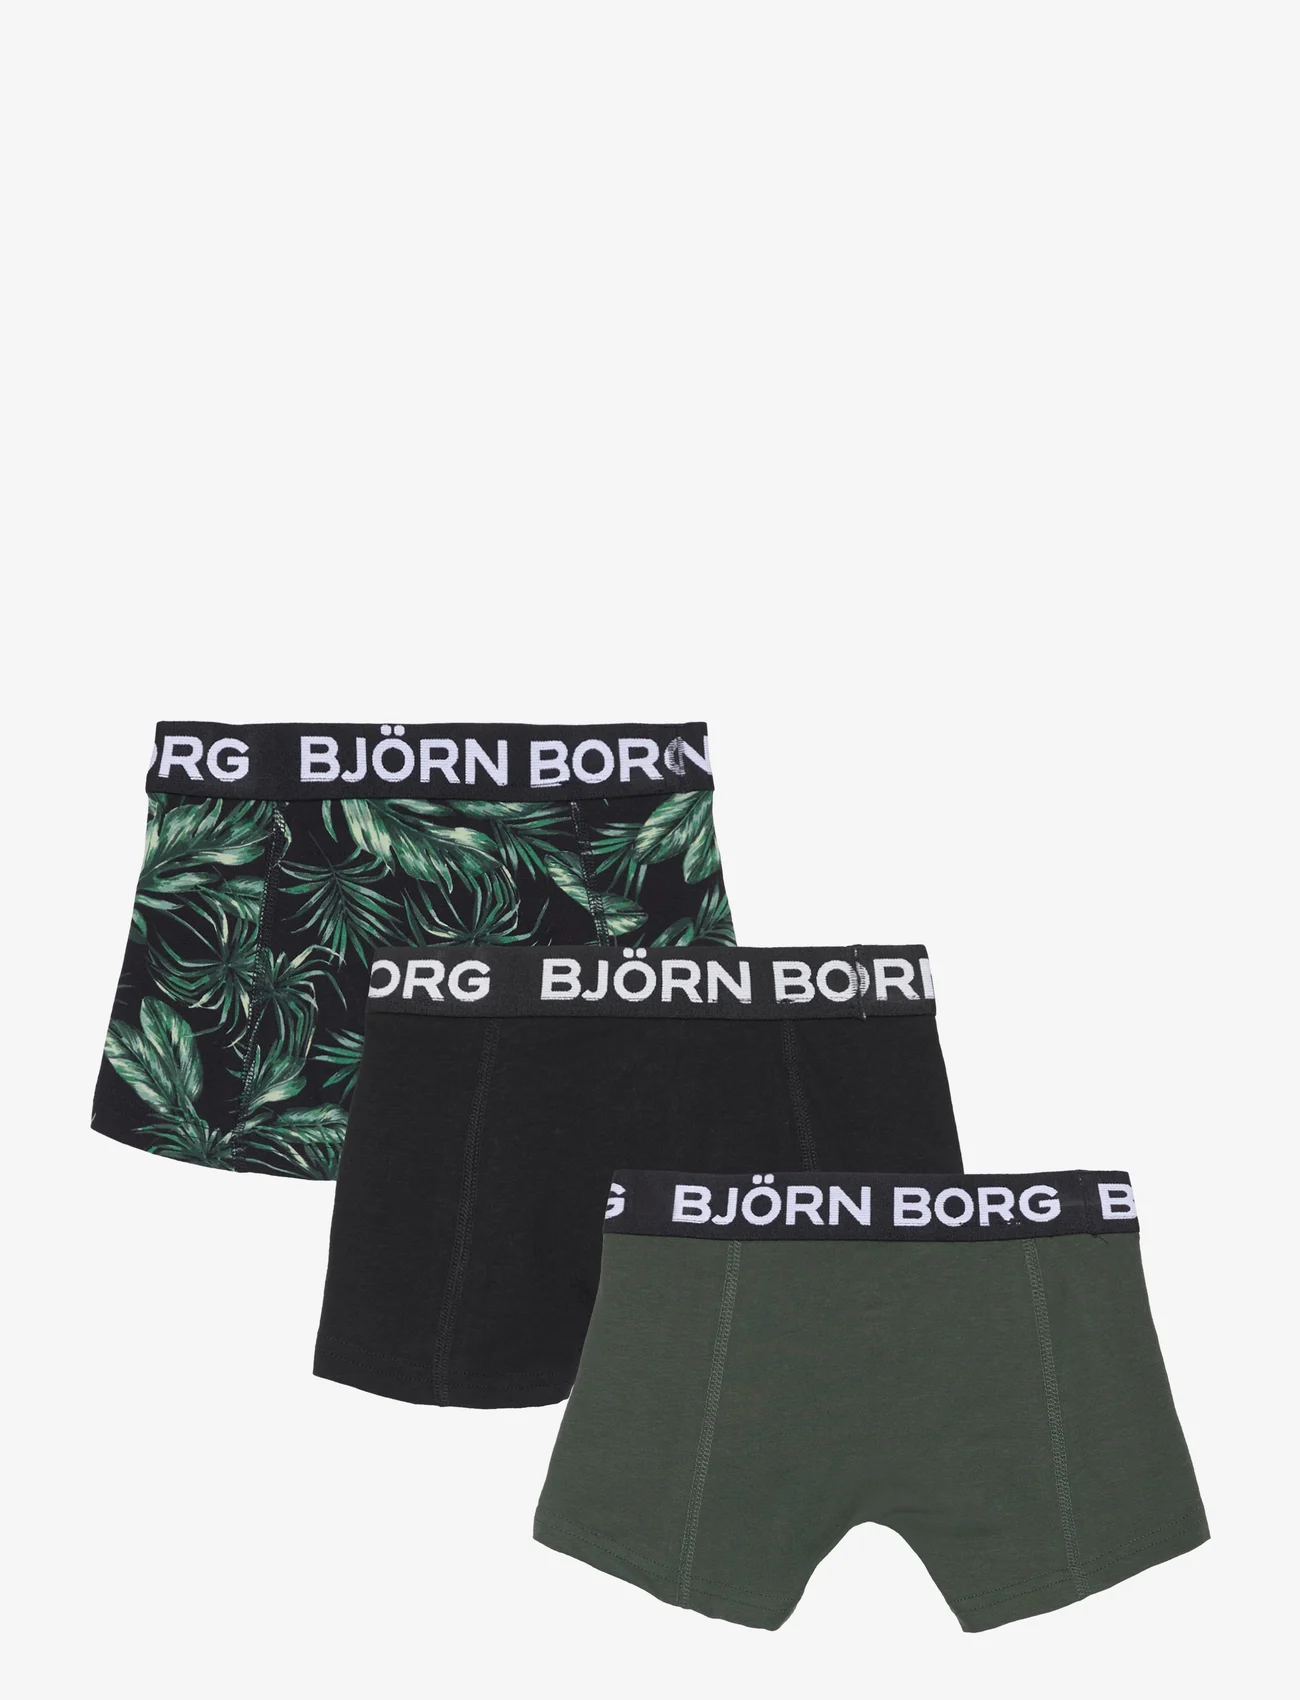 Björn Borg - CORE BOXER 3p - underpants - multipack 3 - 1